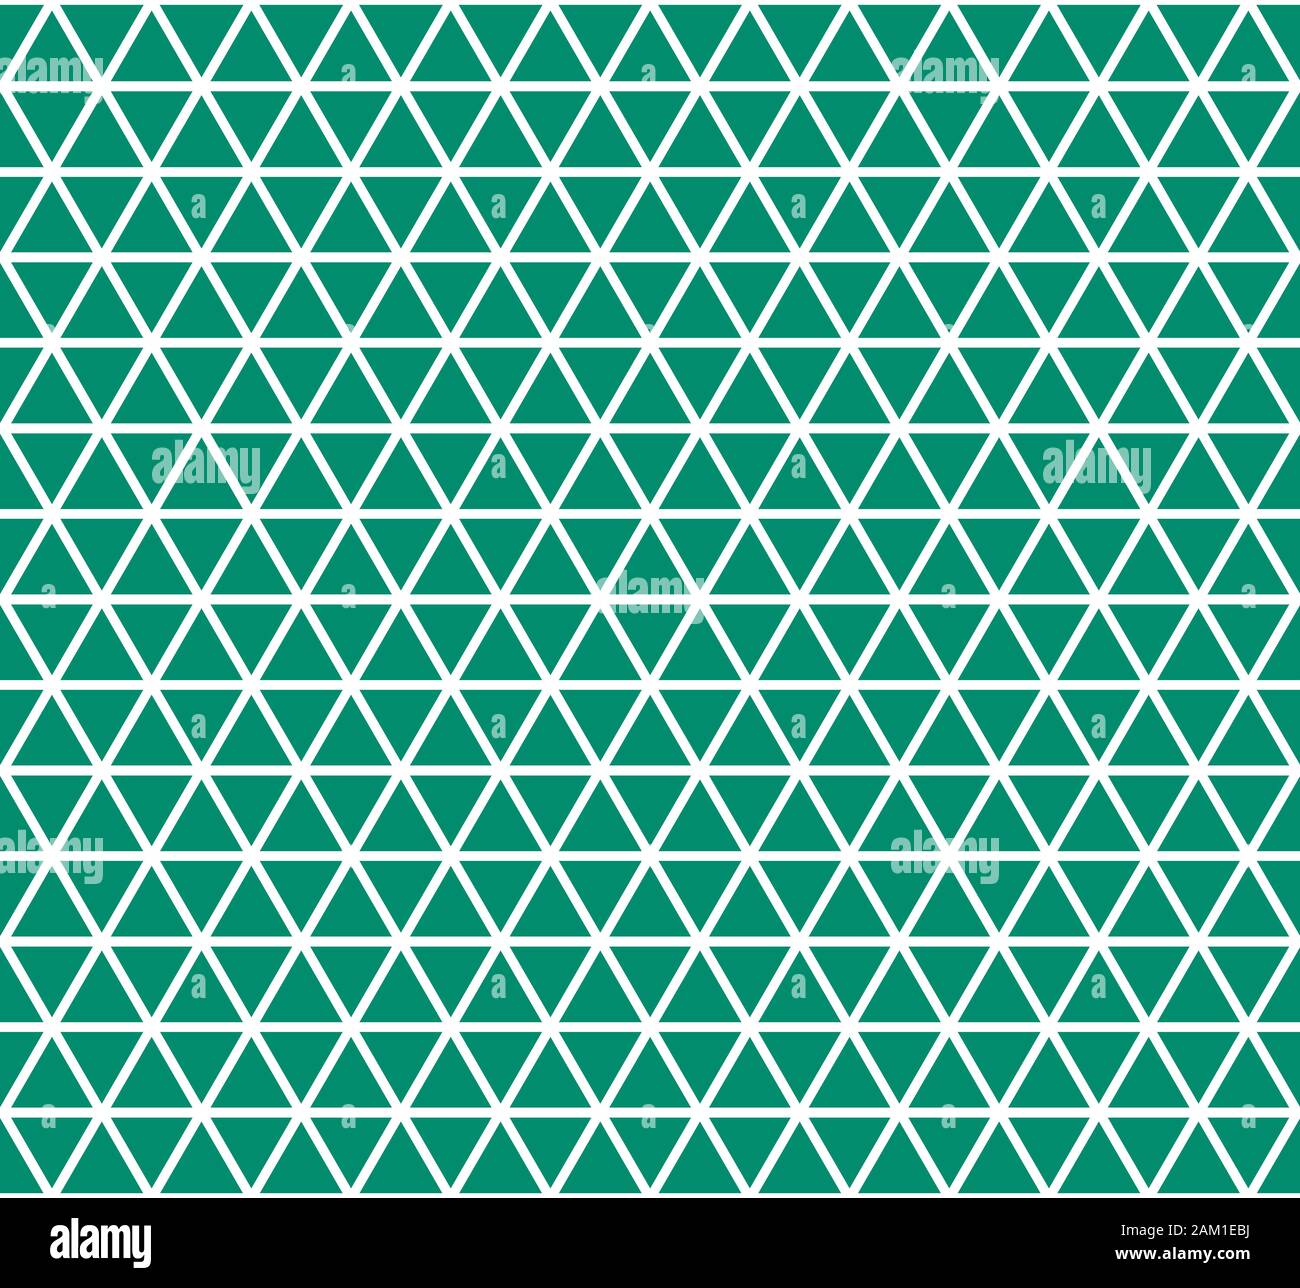 Triangle Seamless Repeat Pattern Background Stock Photo - Alamy